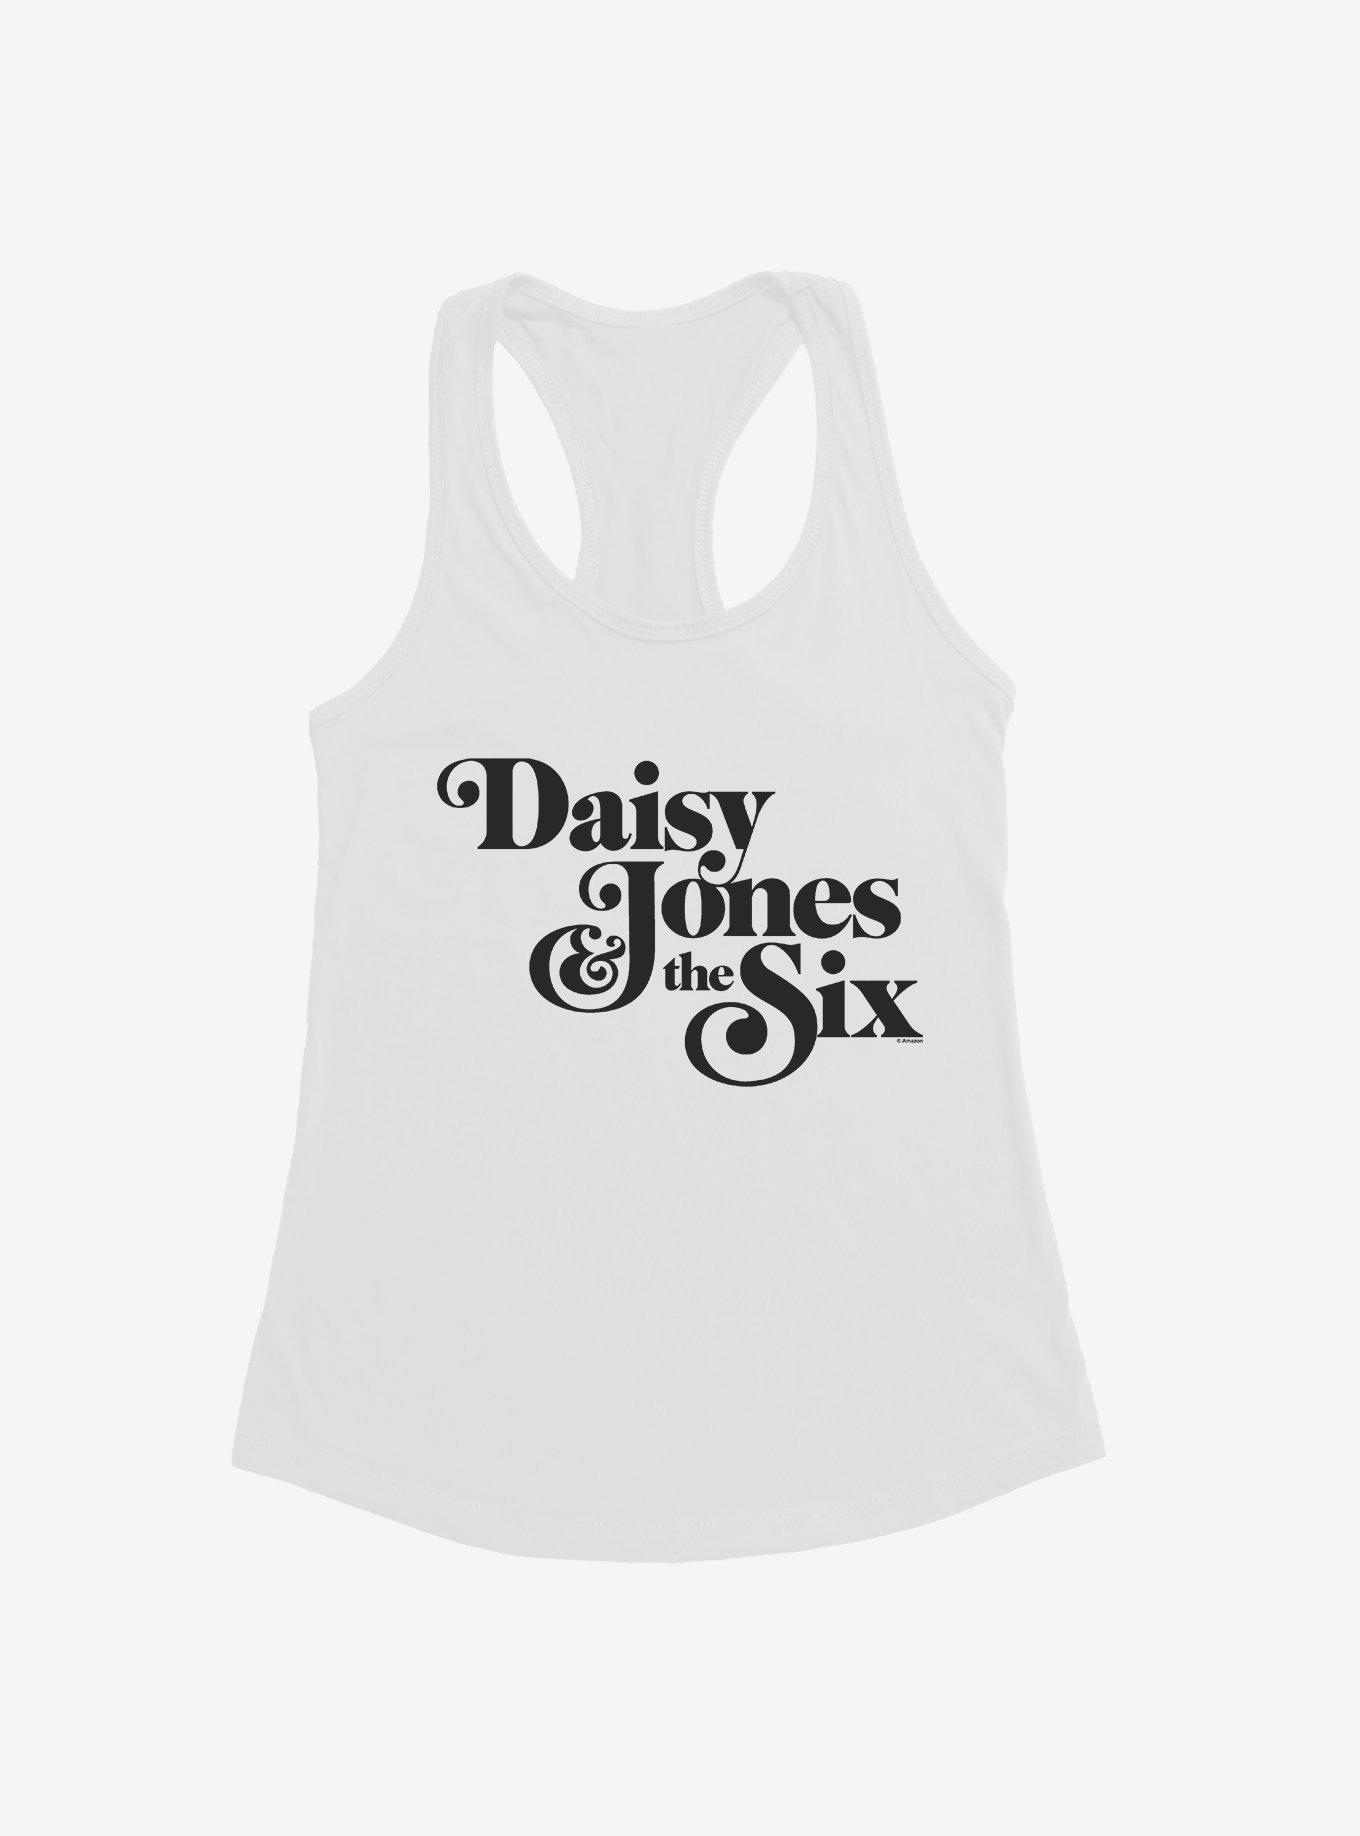 Daisy Jones & The Six Logo Girls Tank